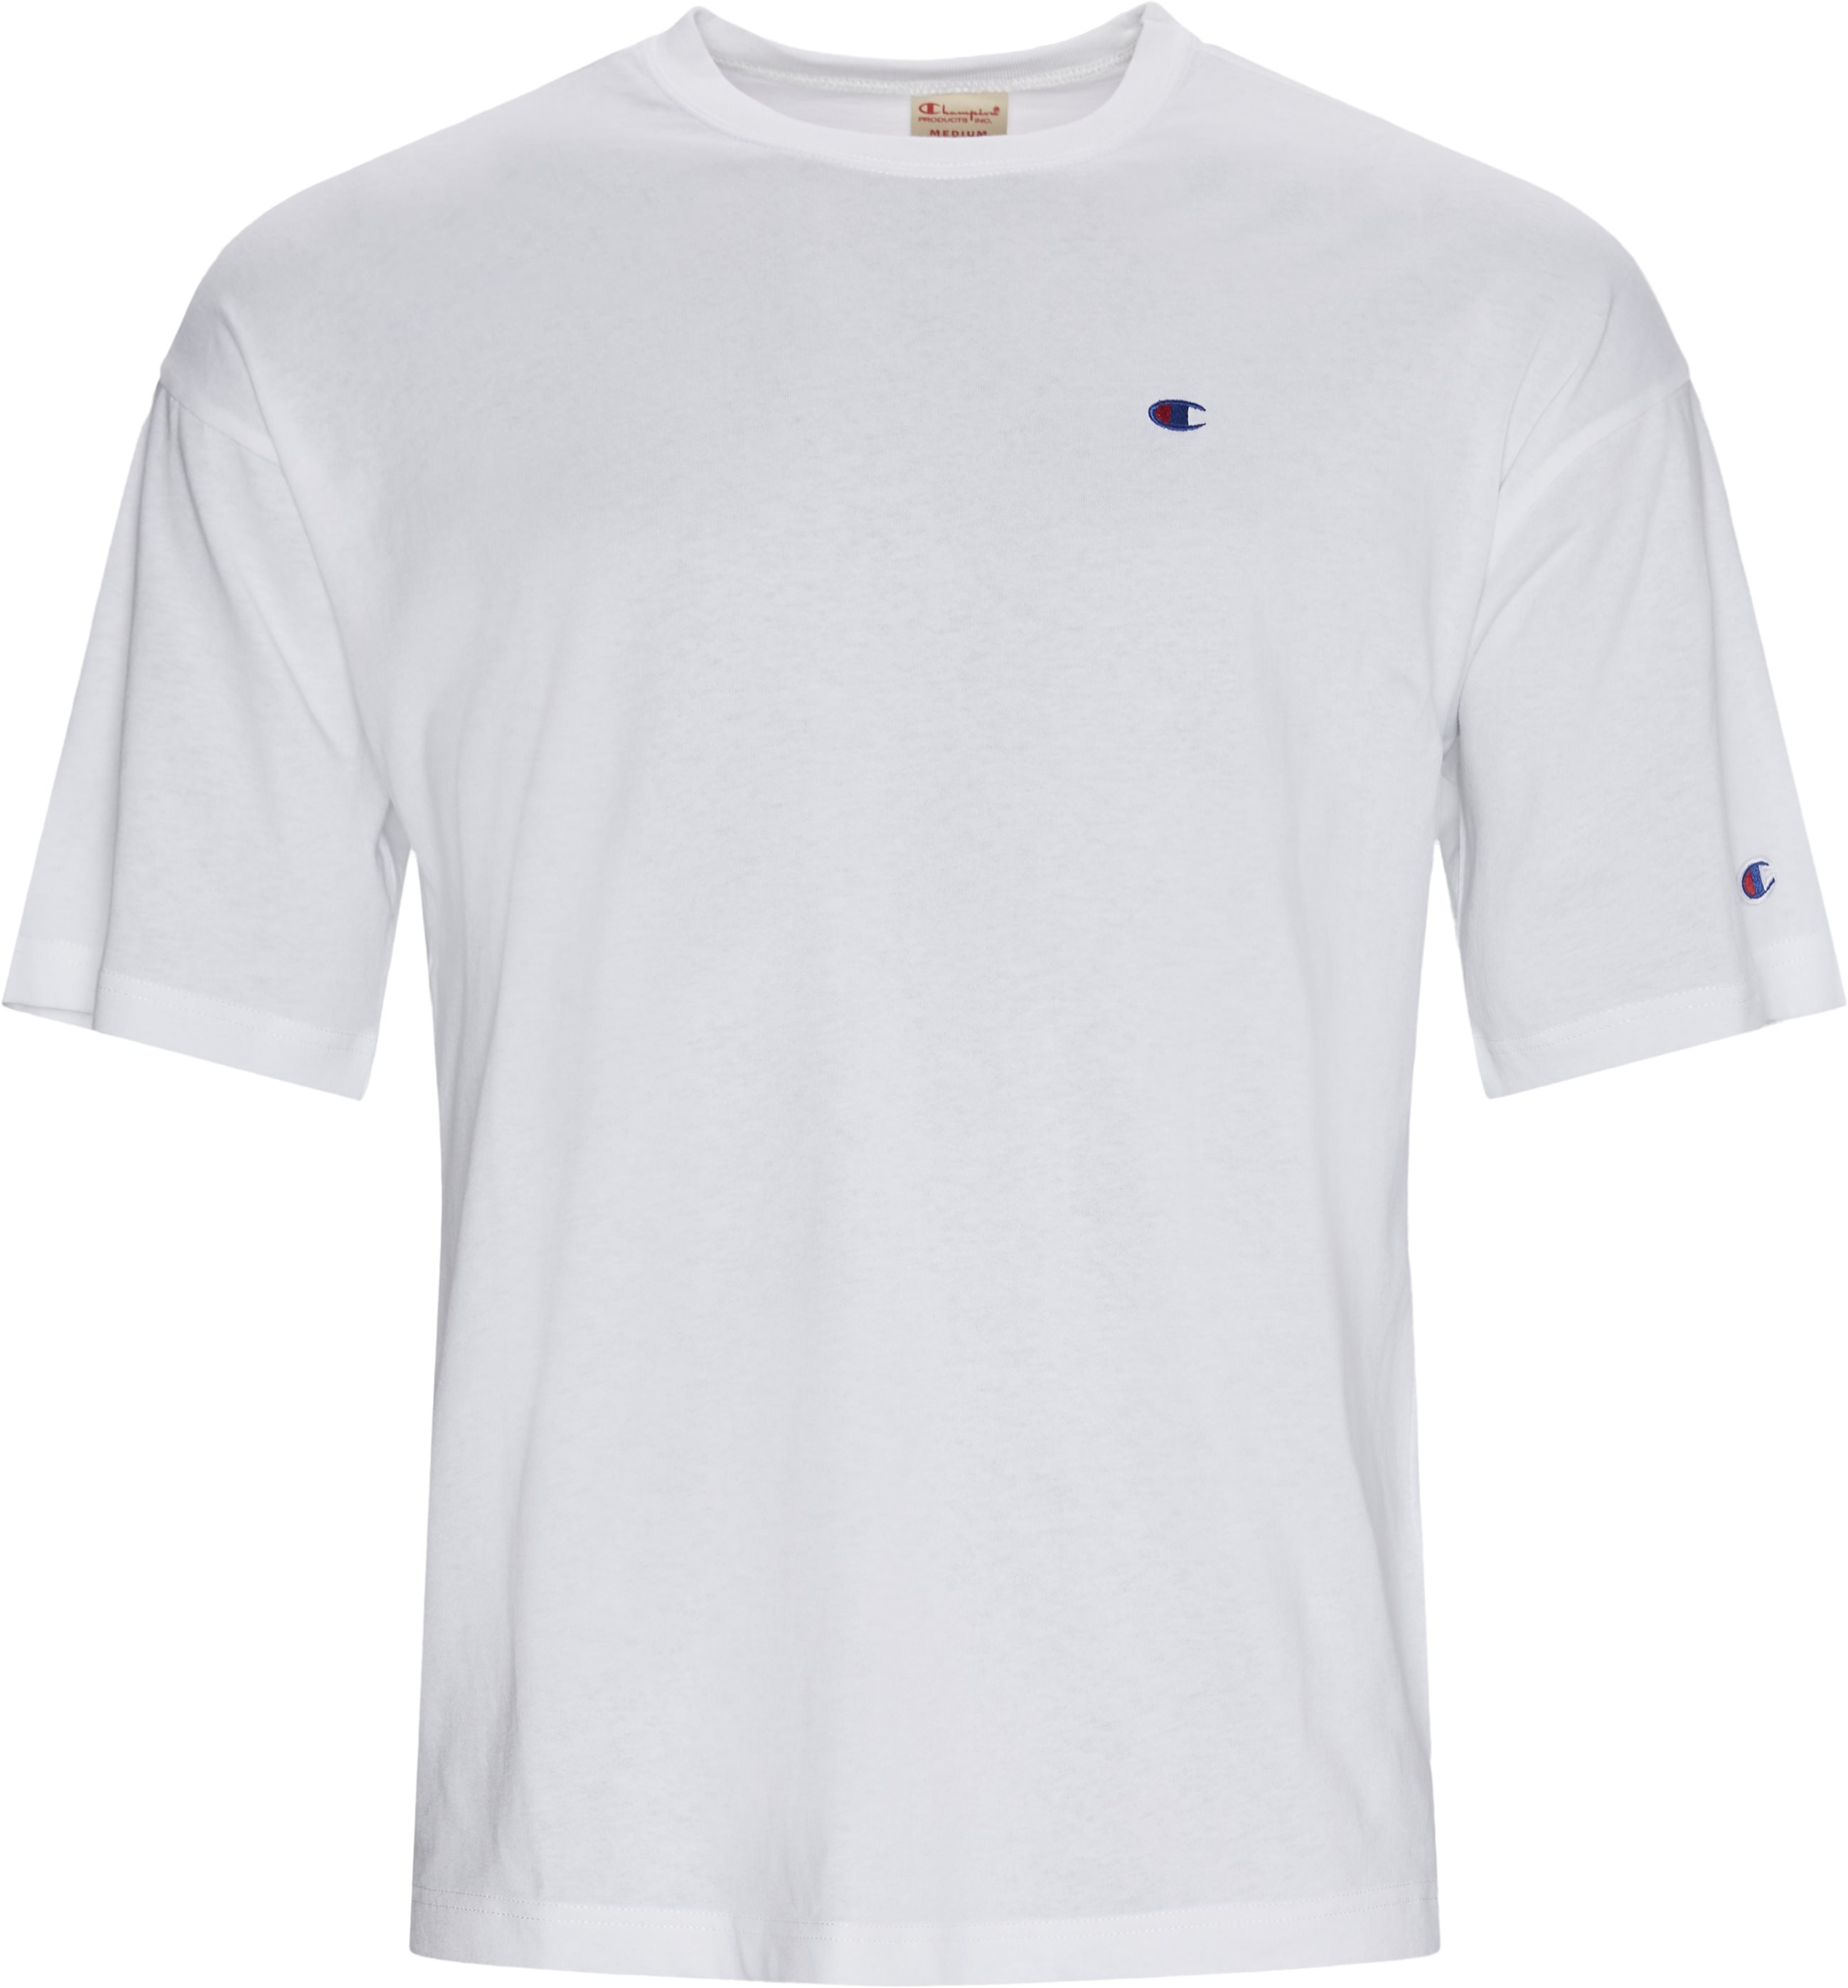 SHAPE Tee - T-shirts - Regular fit - Hvid